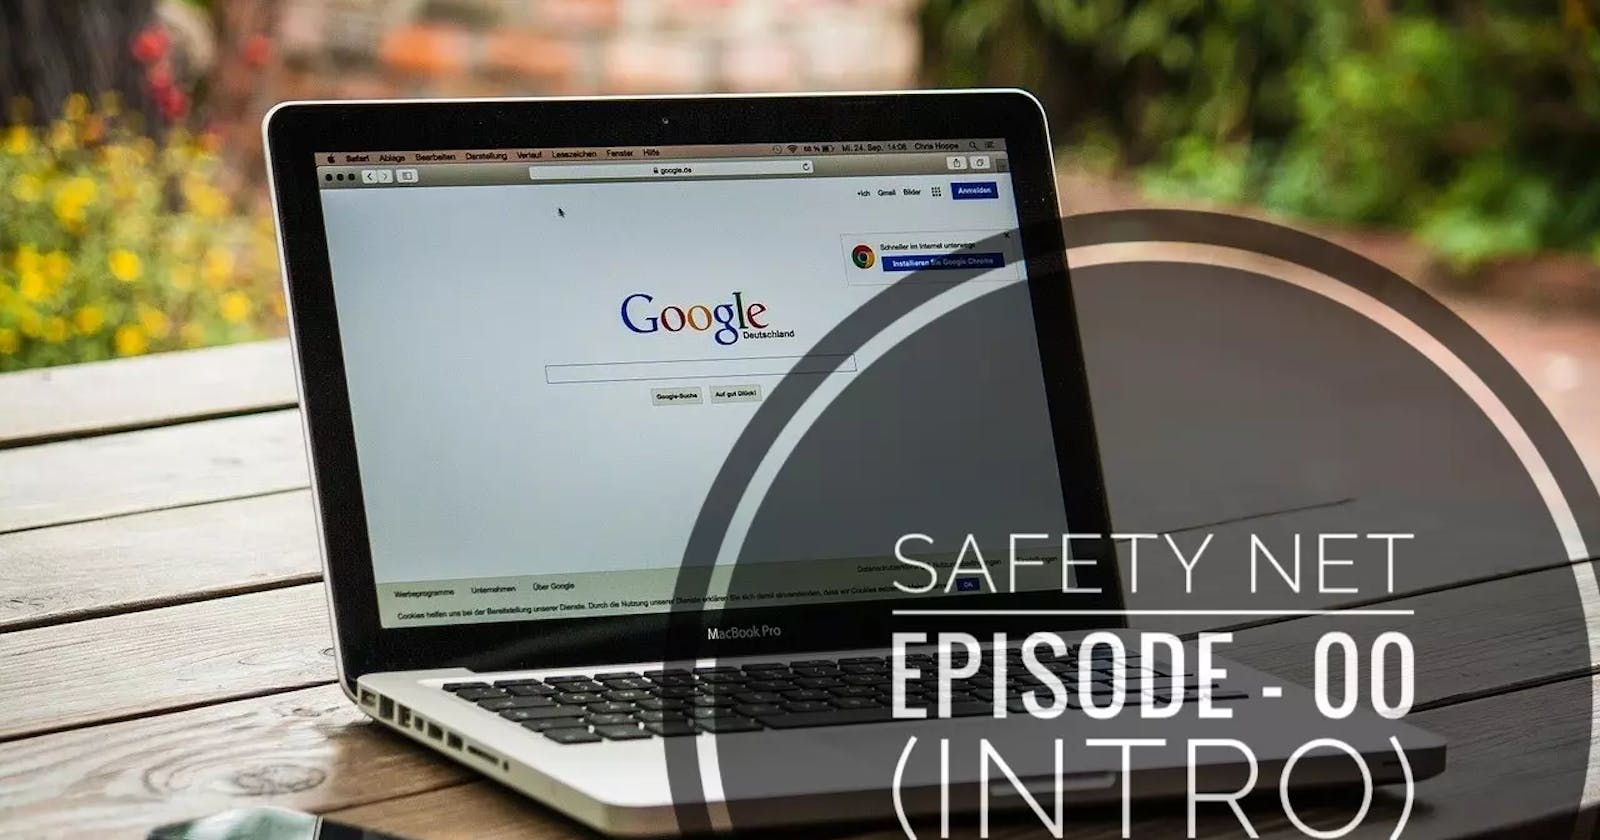 Safety Net
Episode - 00 (Intro)